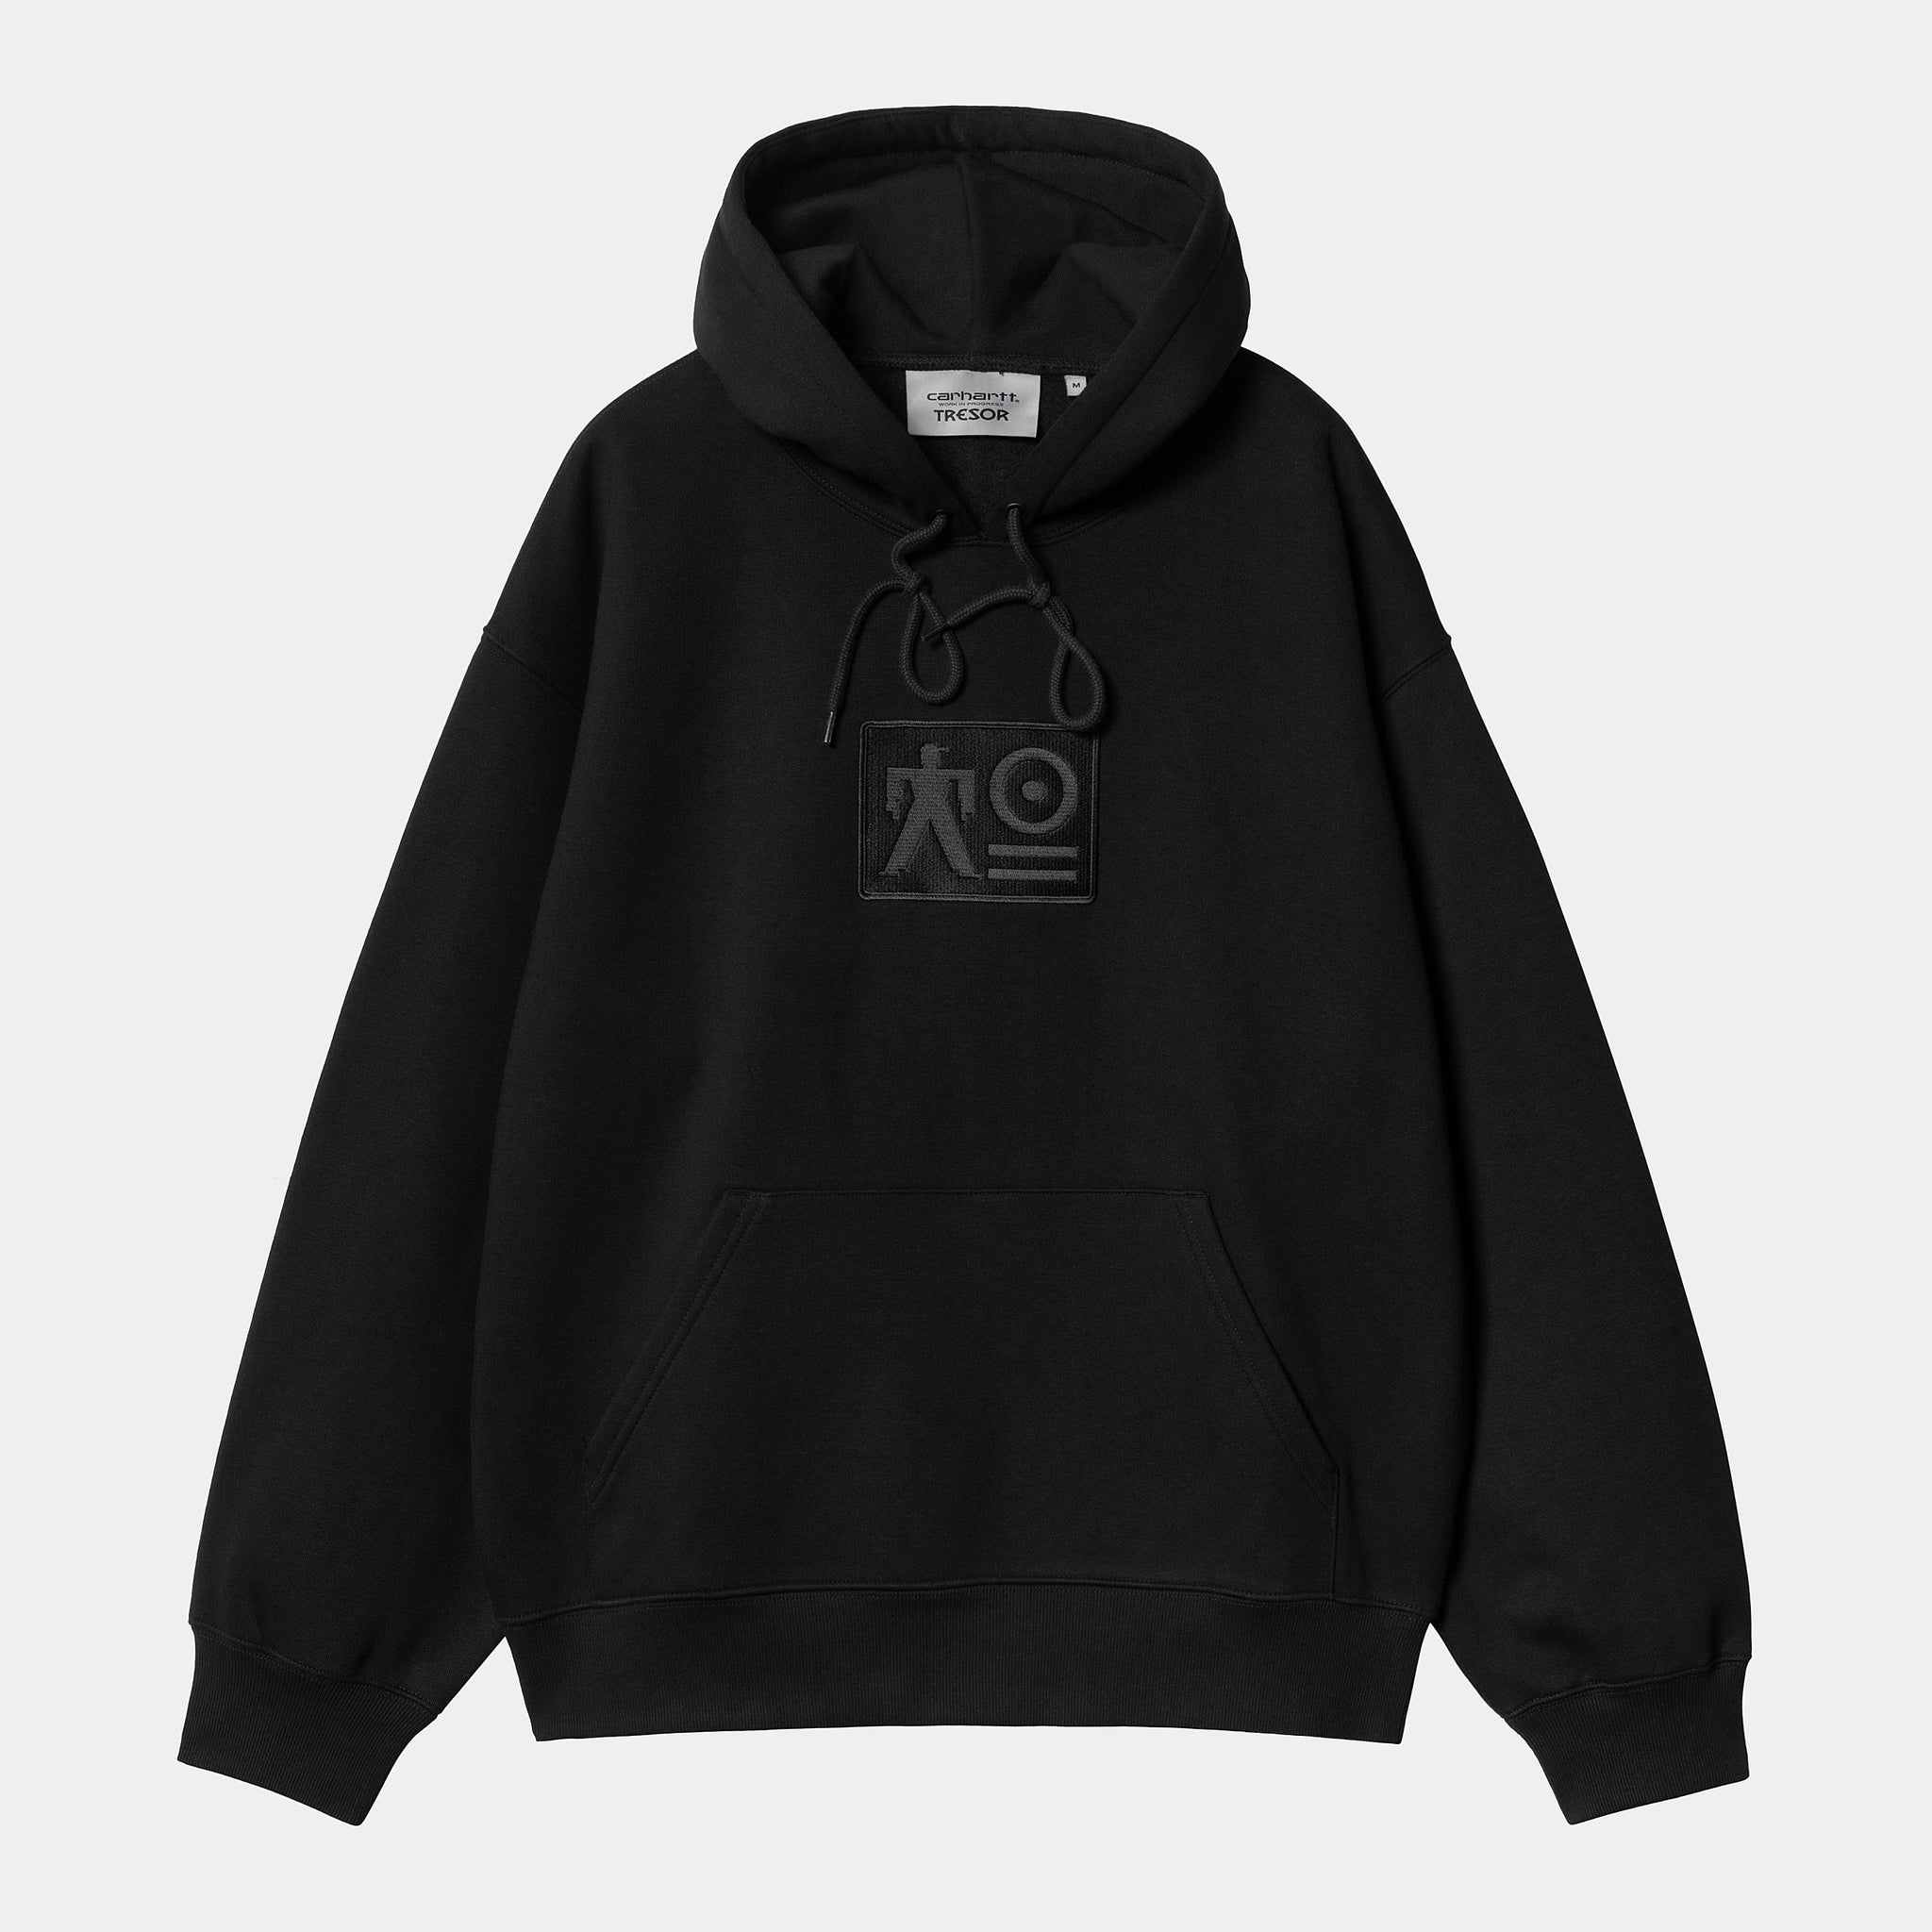 Carhartt WIP x Tresor Basement Hooded Sweatshirt Black / Grey